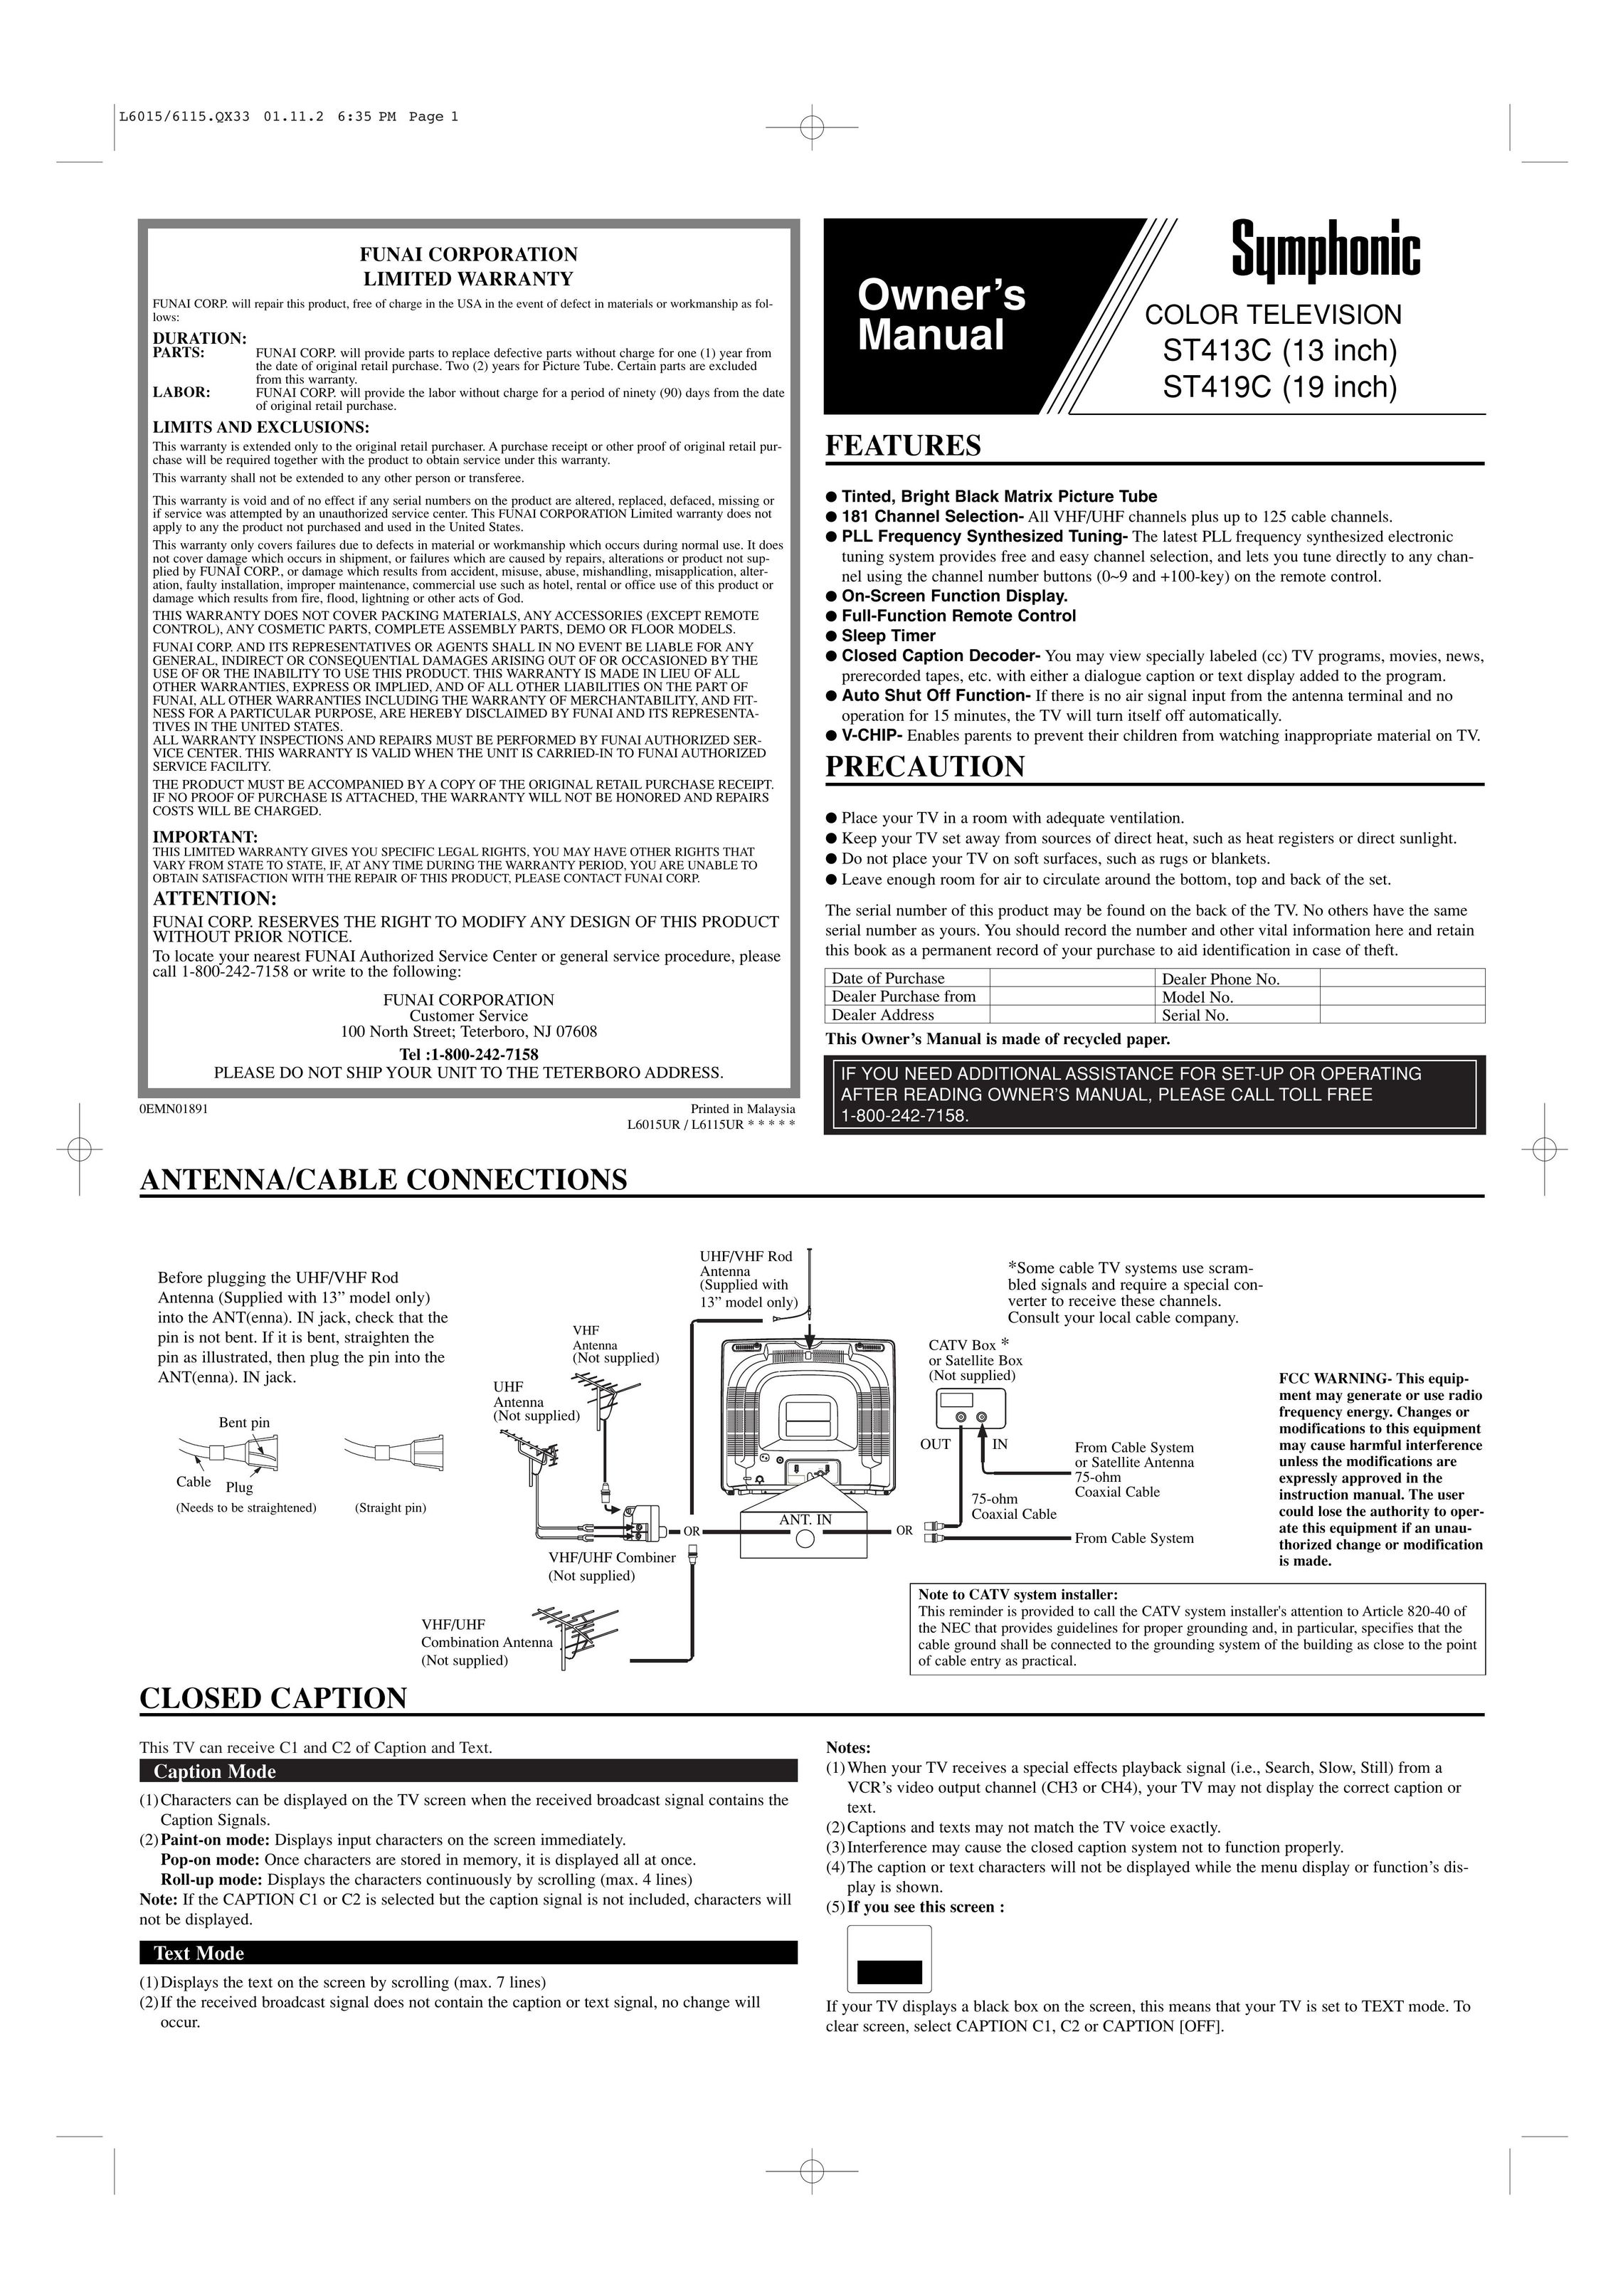 Symphonic ST413C, ST419C CRT Television User Manual